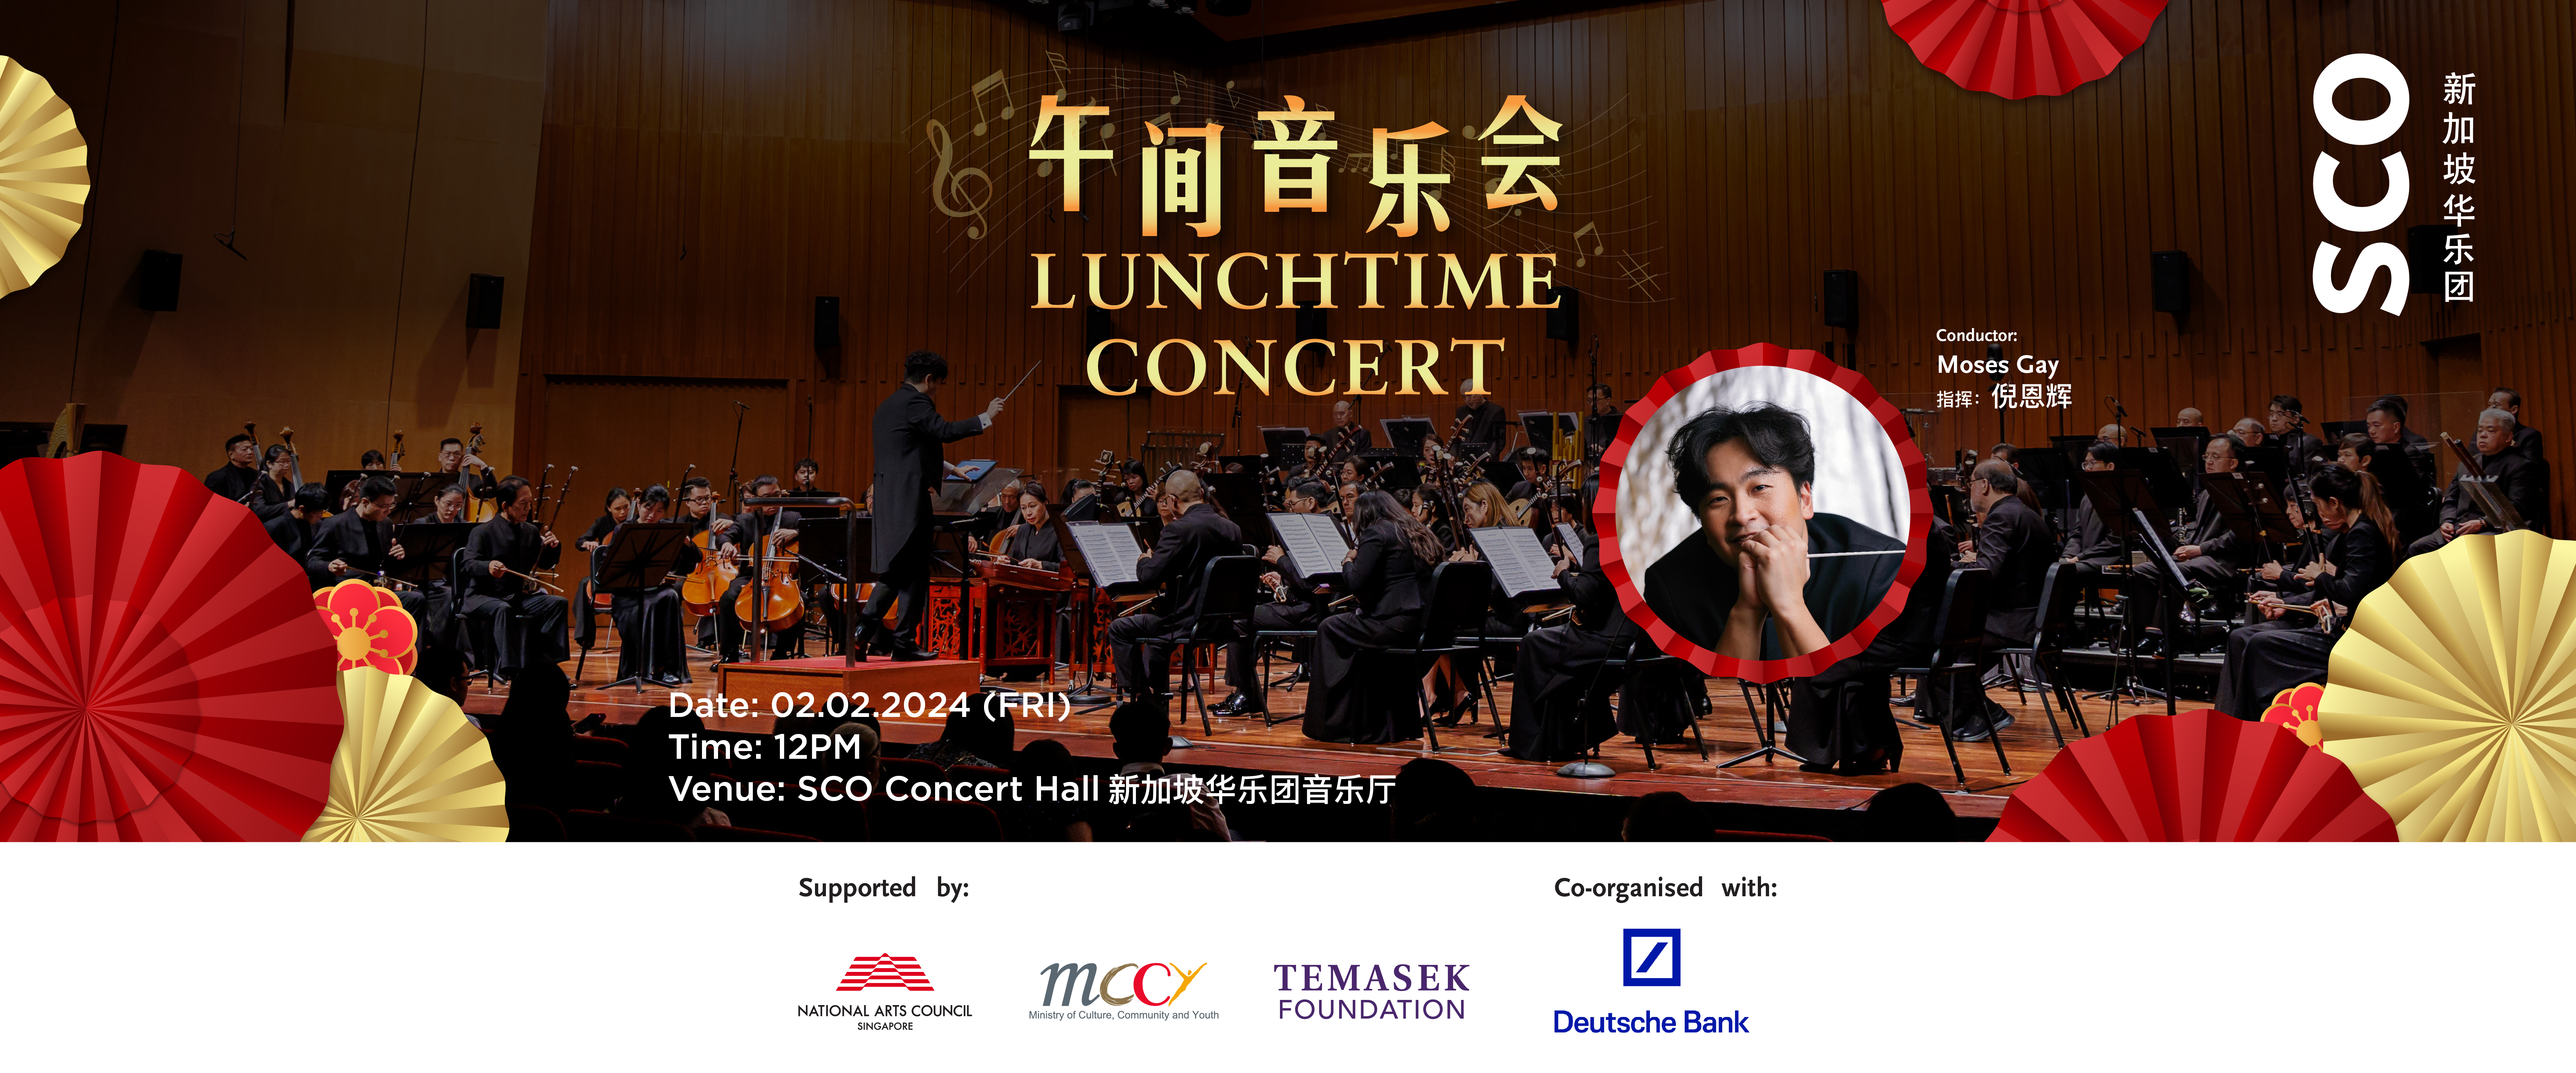 SCO Lunchtime Concert 2 Feb 1920x800